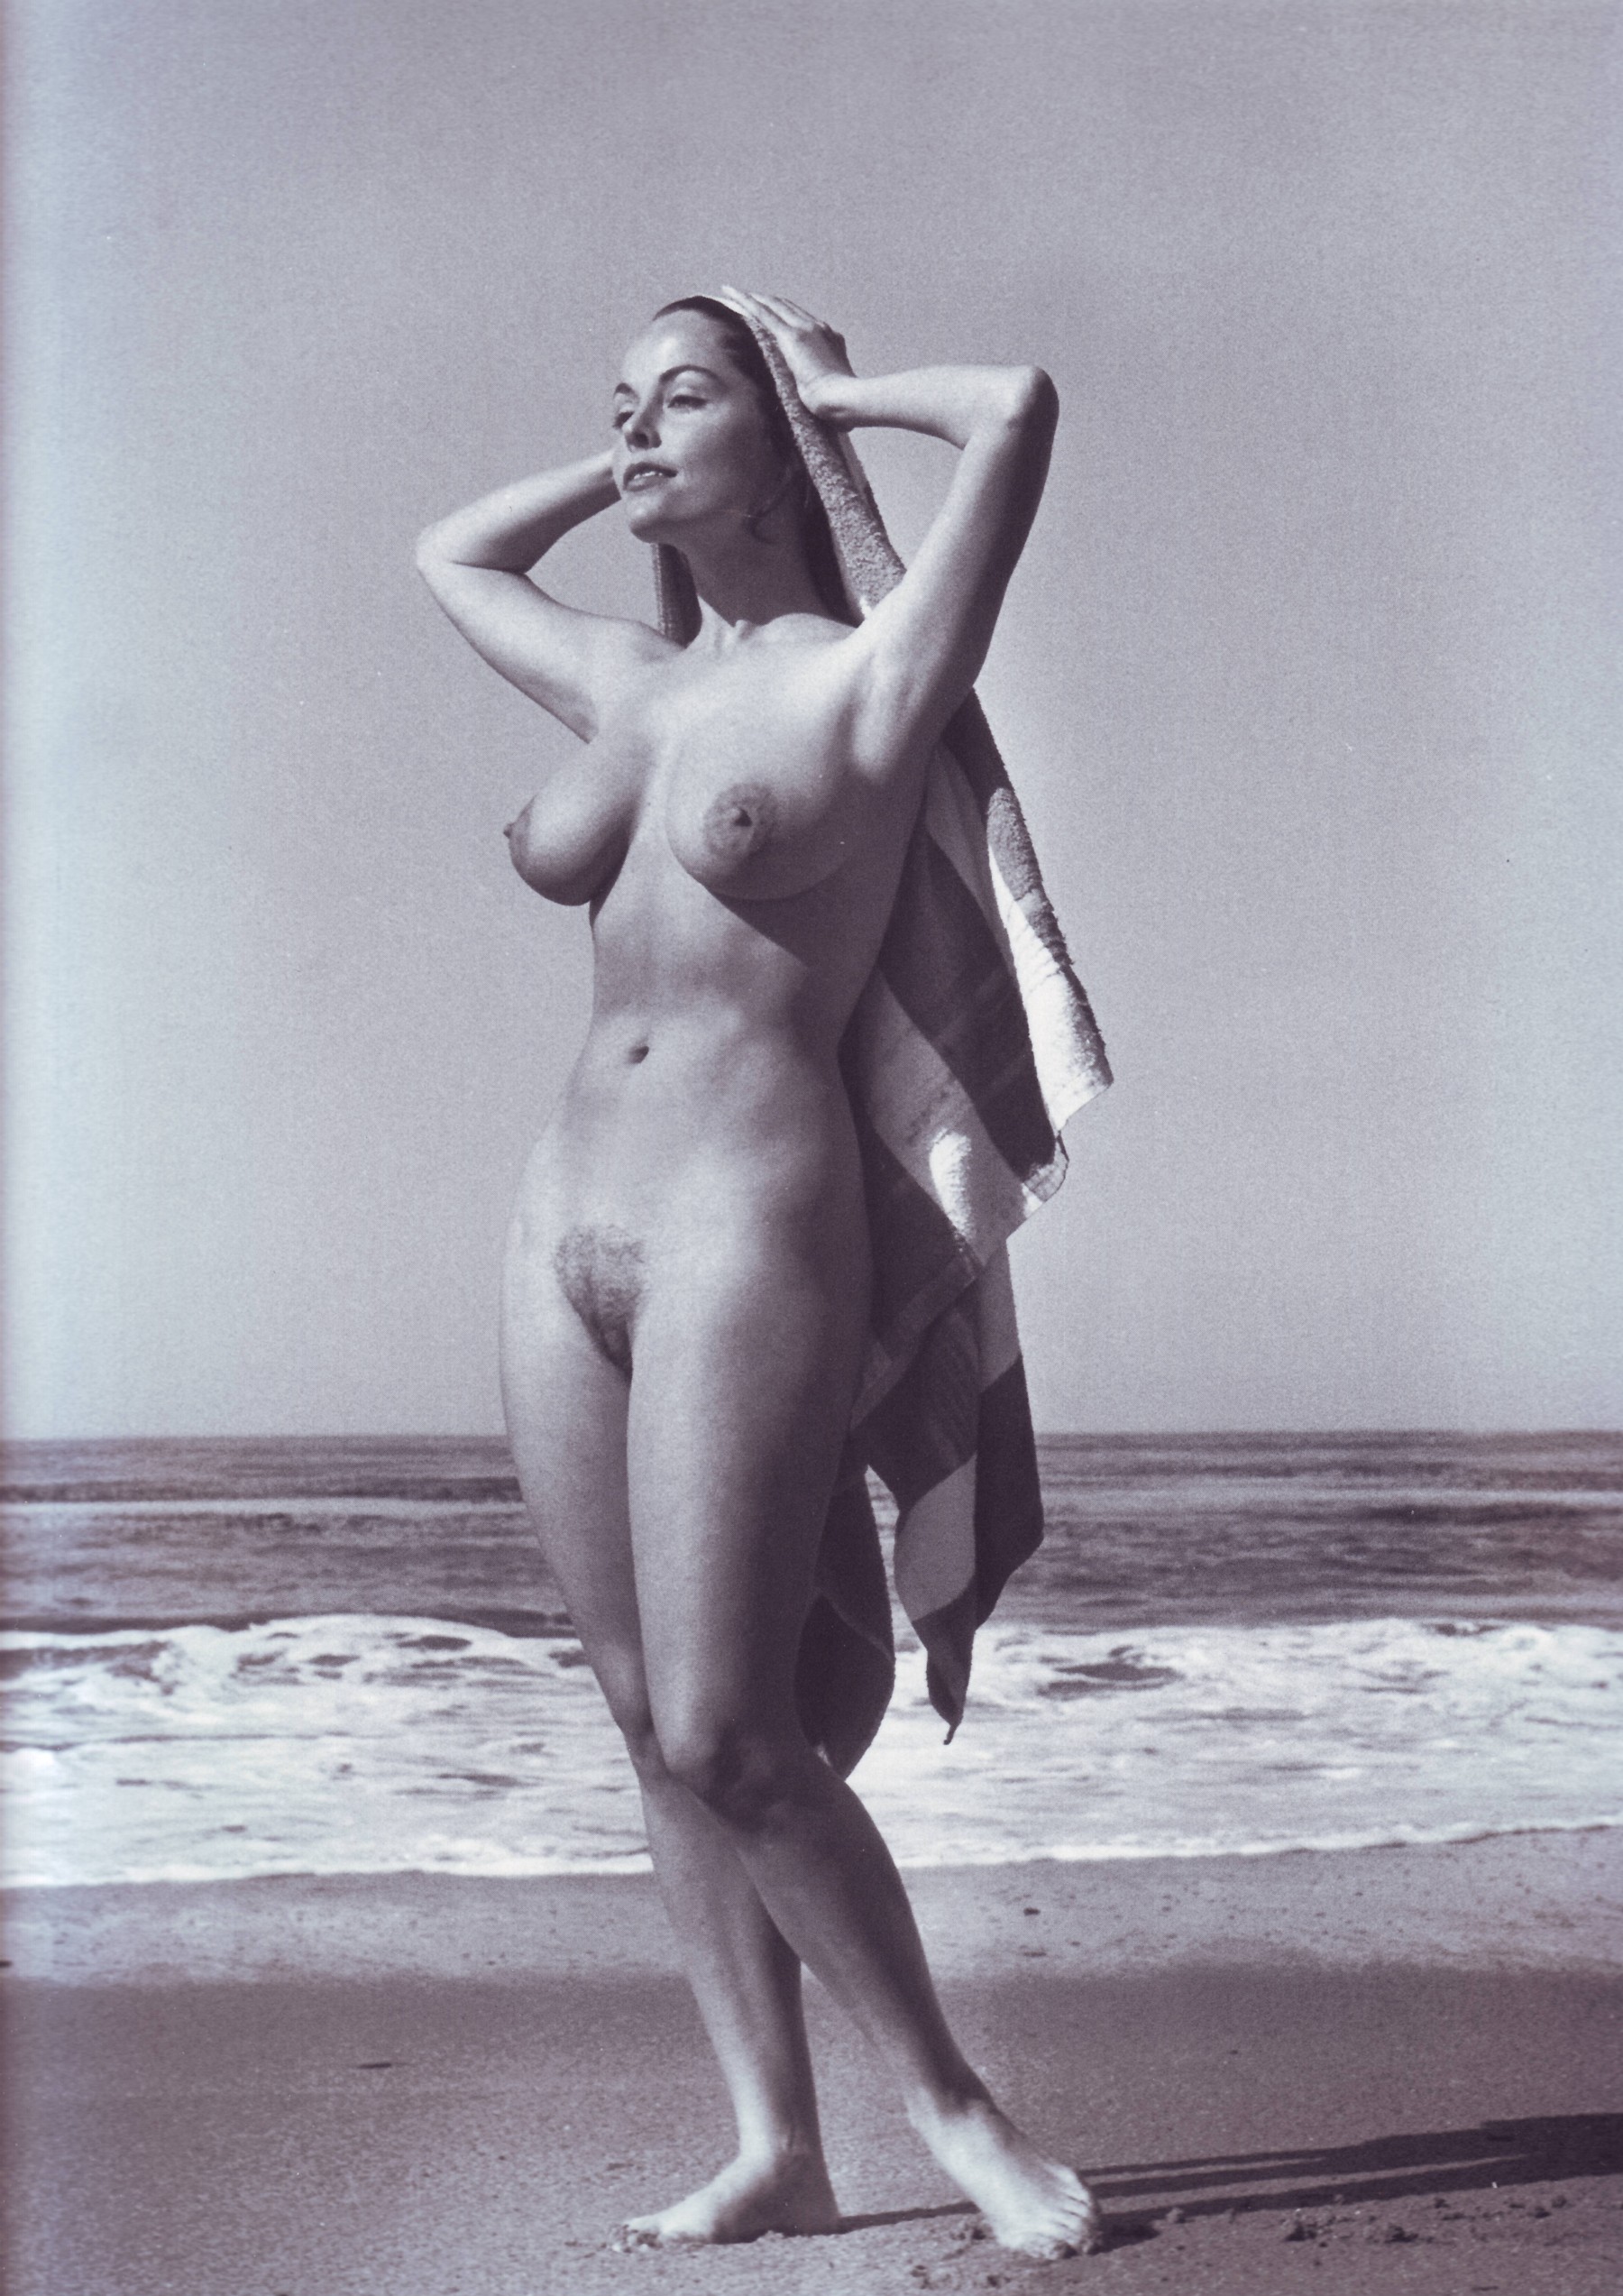 Diane webber nude 👉 👌 Diane Webber Nude - Telegraph